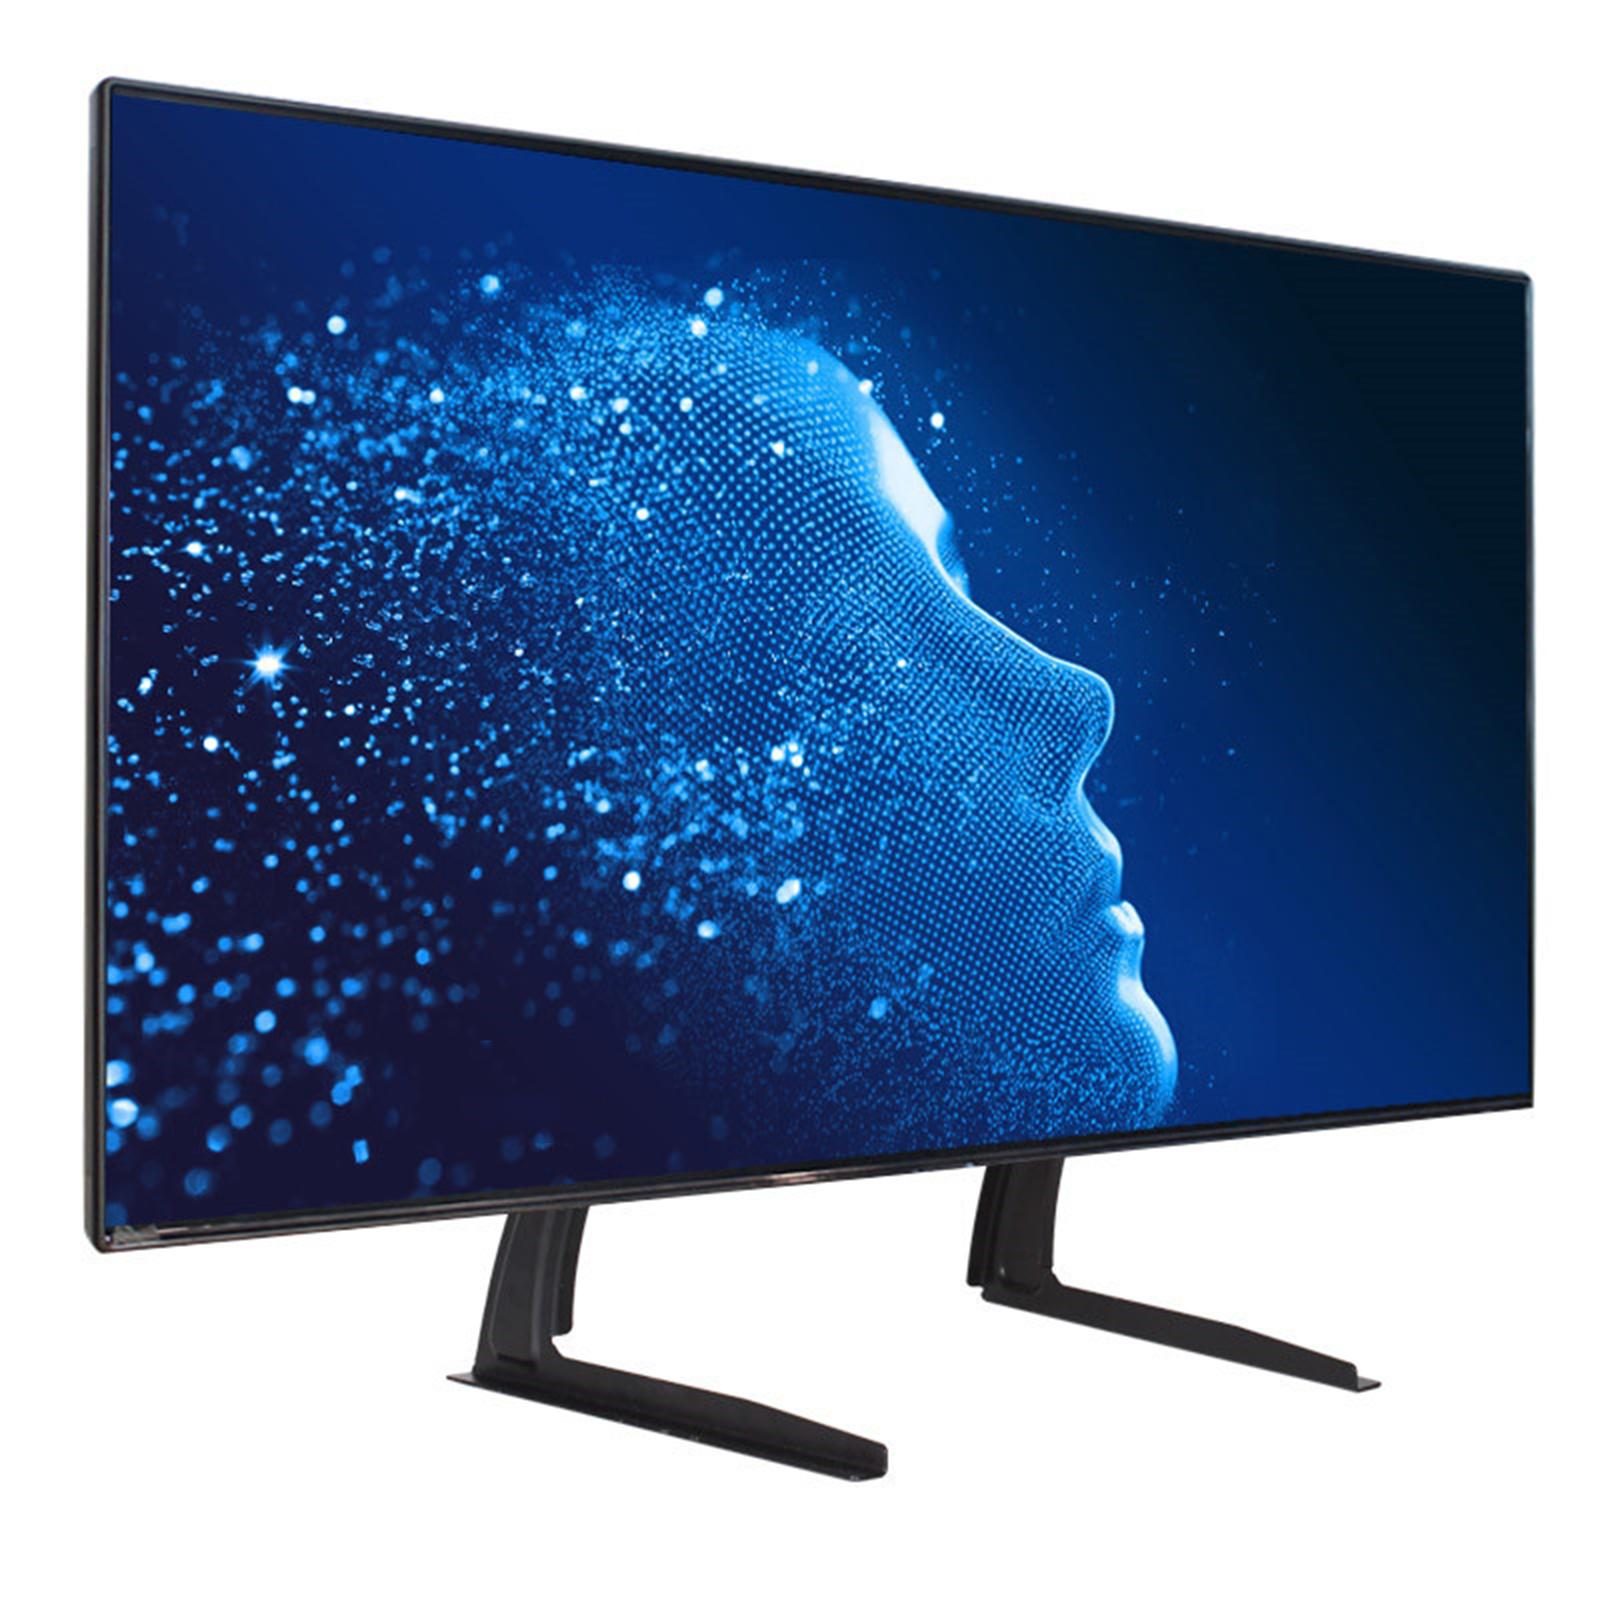 Universal Table TV Stand Bracket for LCD Flat Screen Black 695x355x25mm